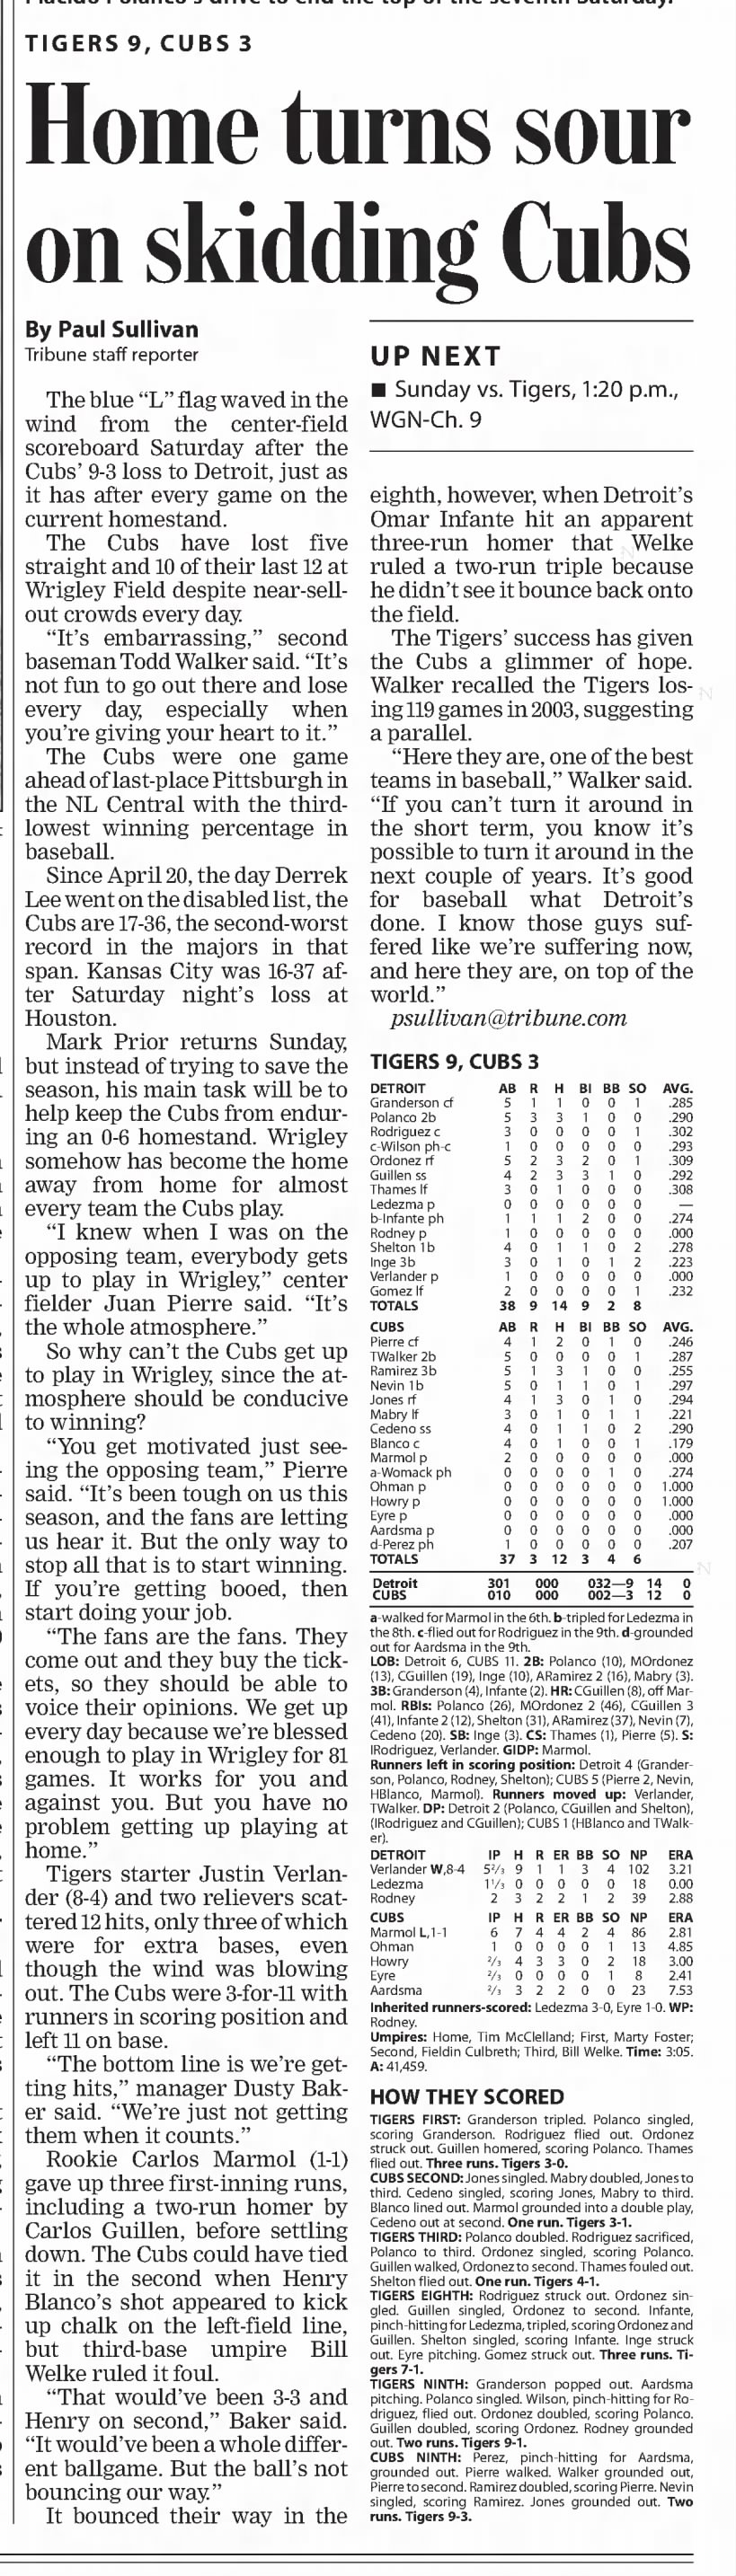 Sun 6/18/2006: Tigers at Wrigley - game 2